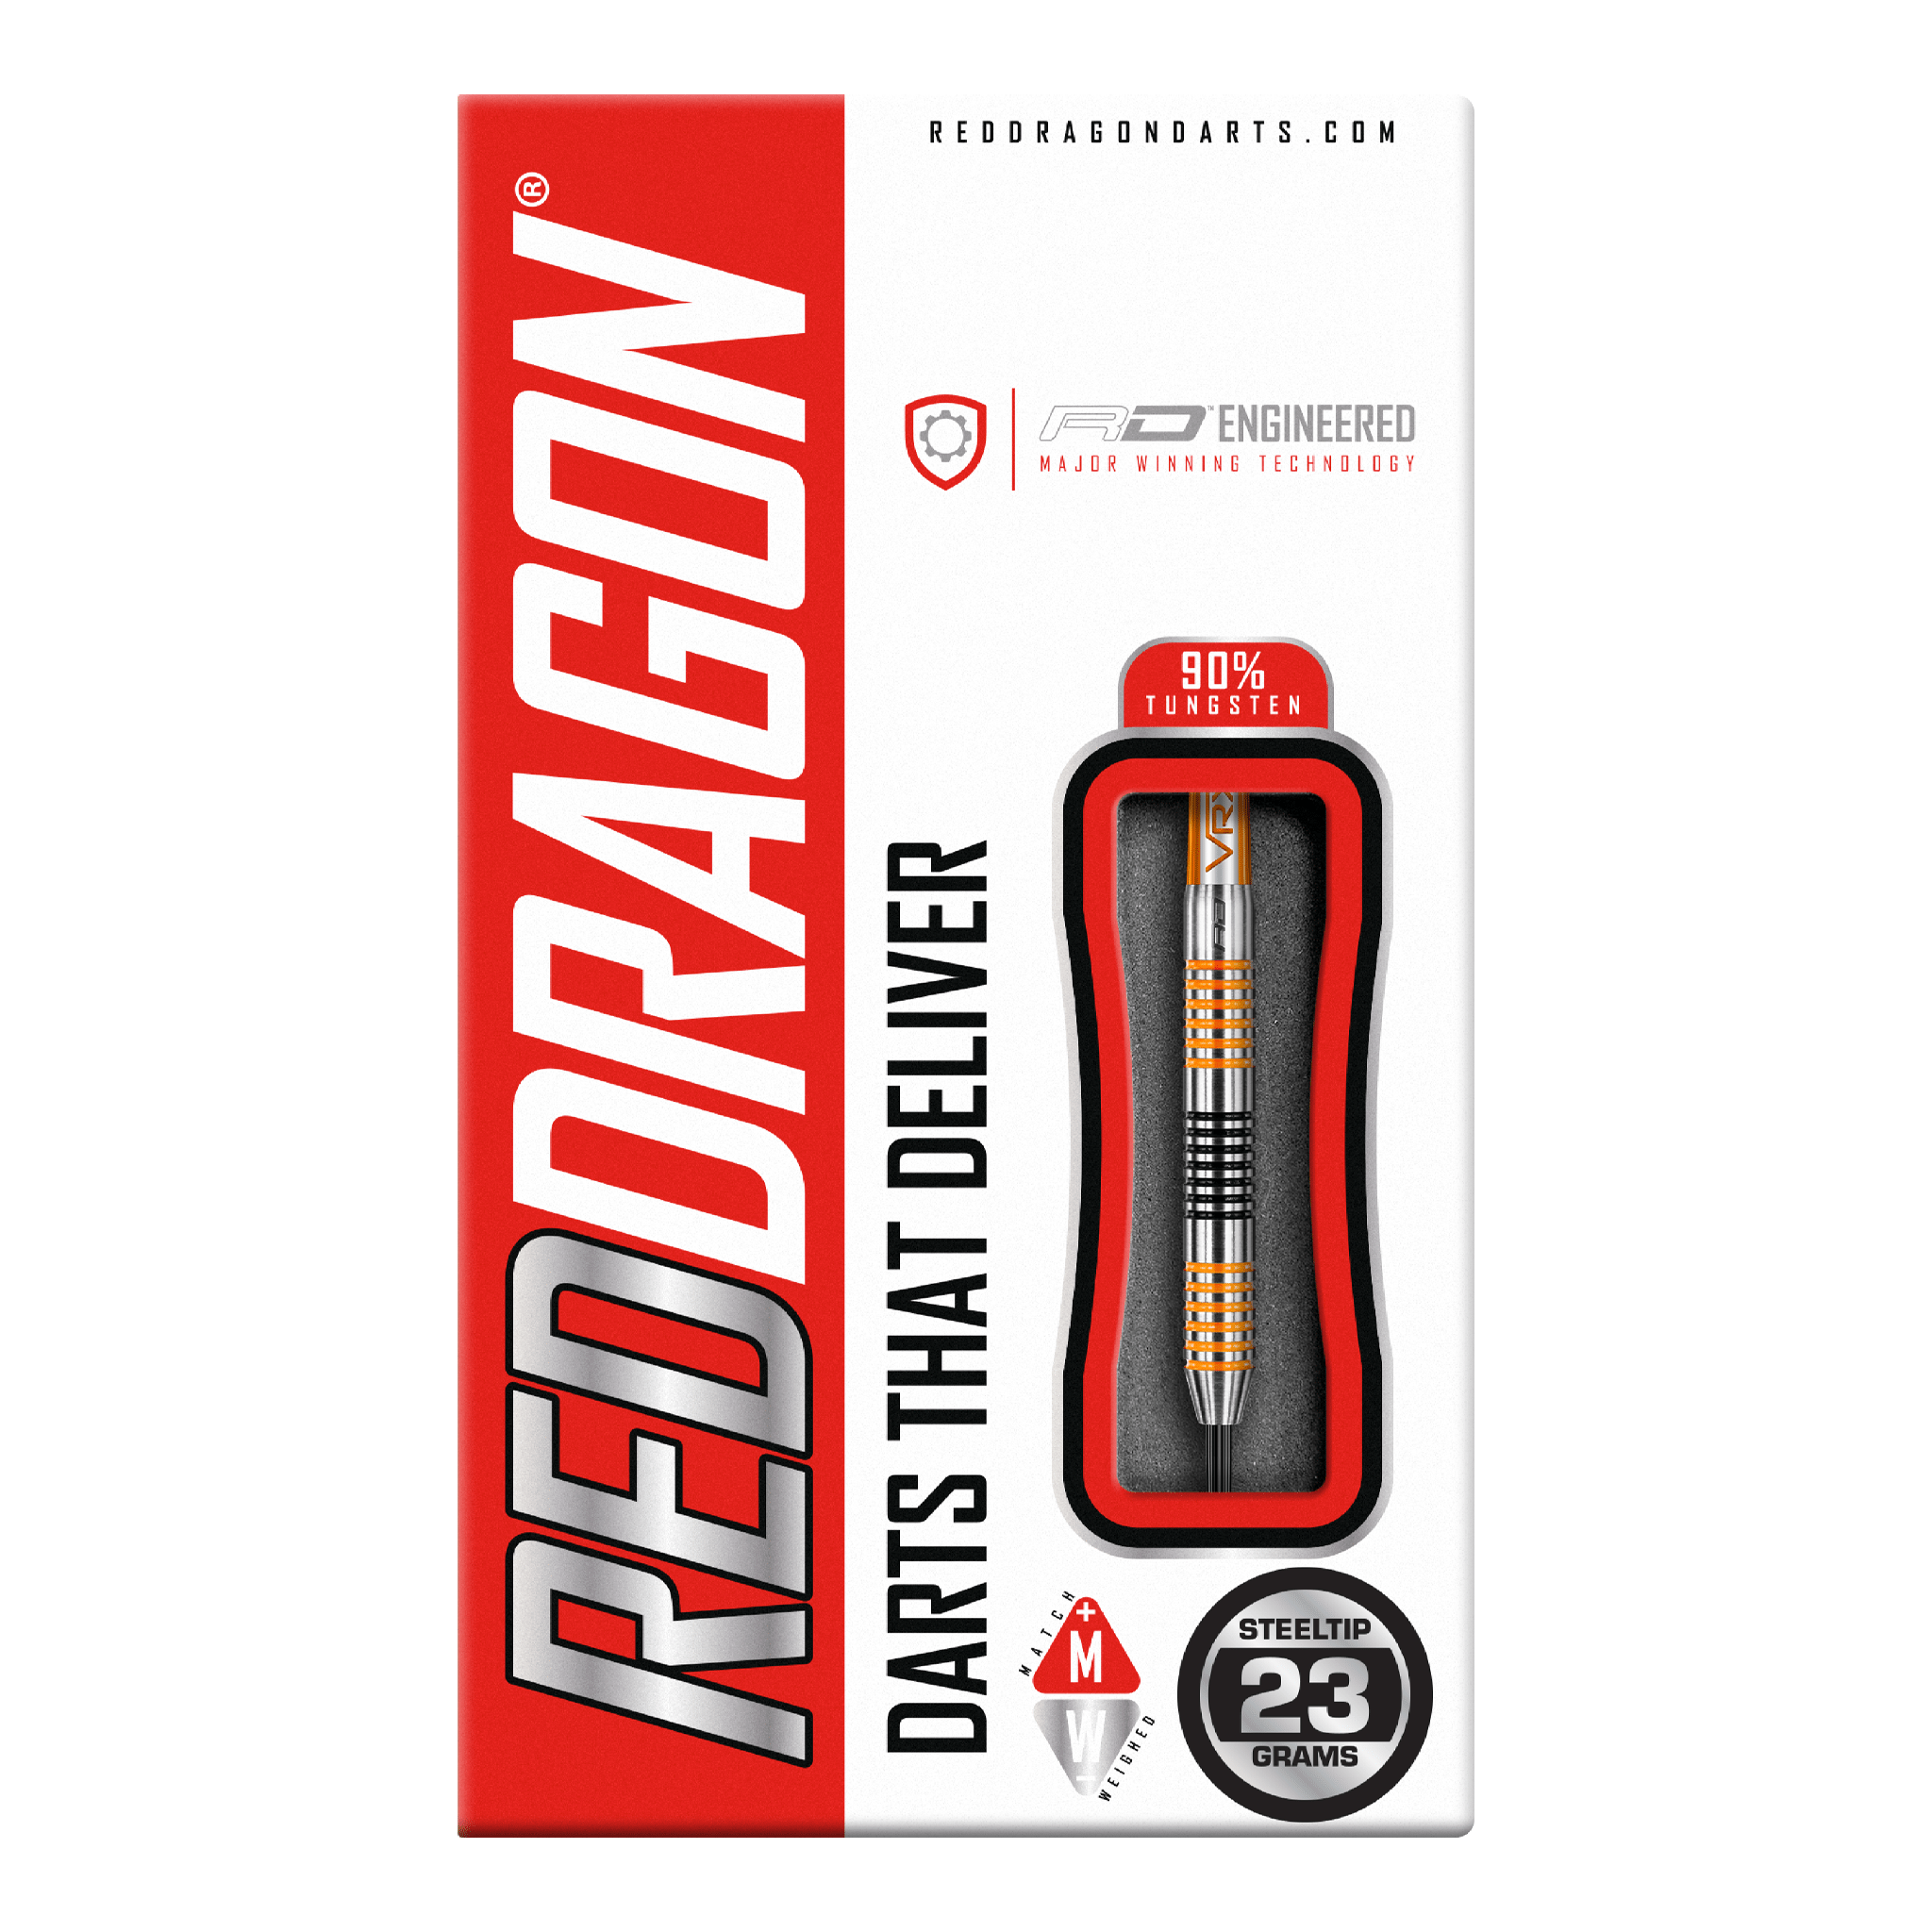 Red Dragon Amberjack 4 - 90% Tungsten Steel Tip Darts 23 Grams Darts